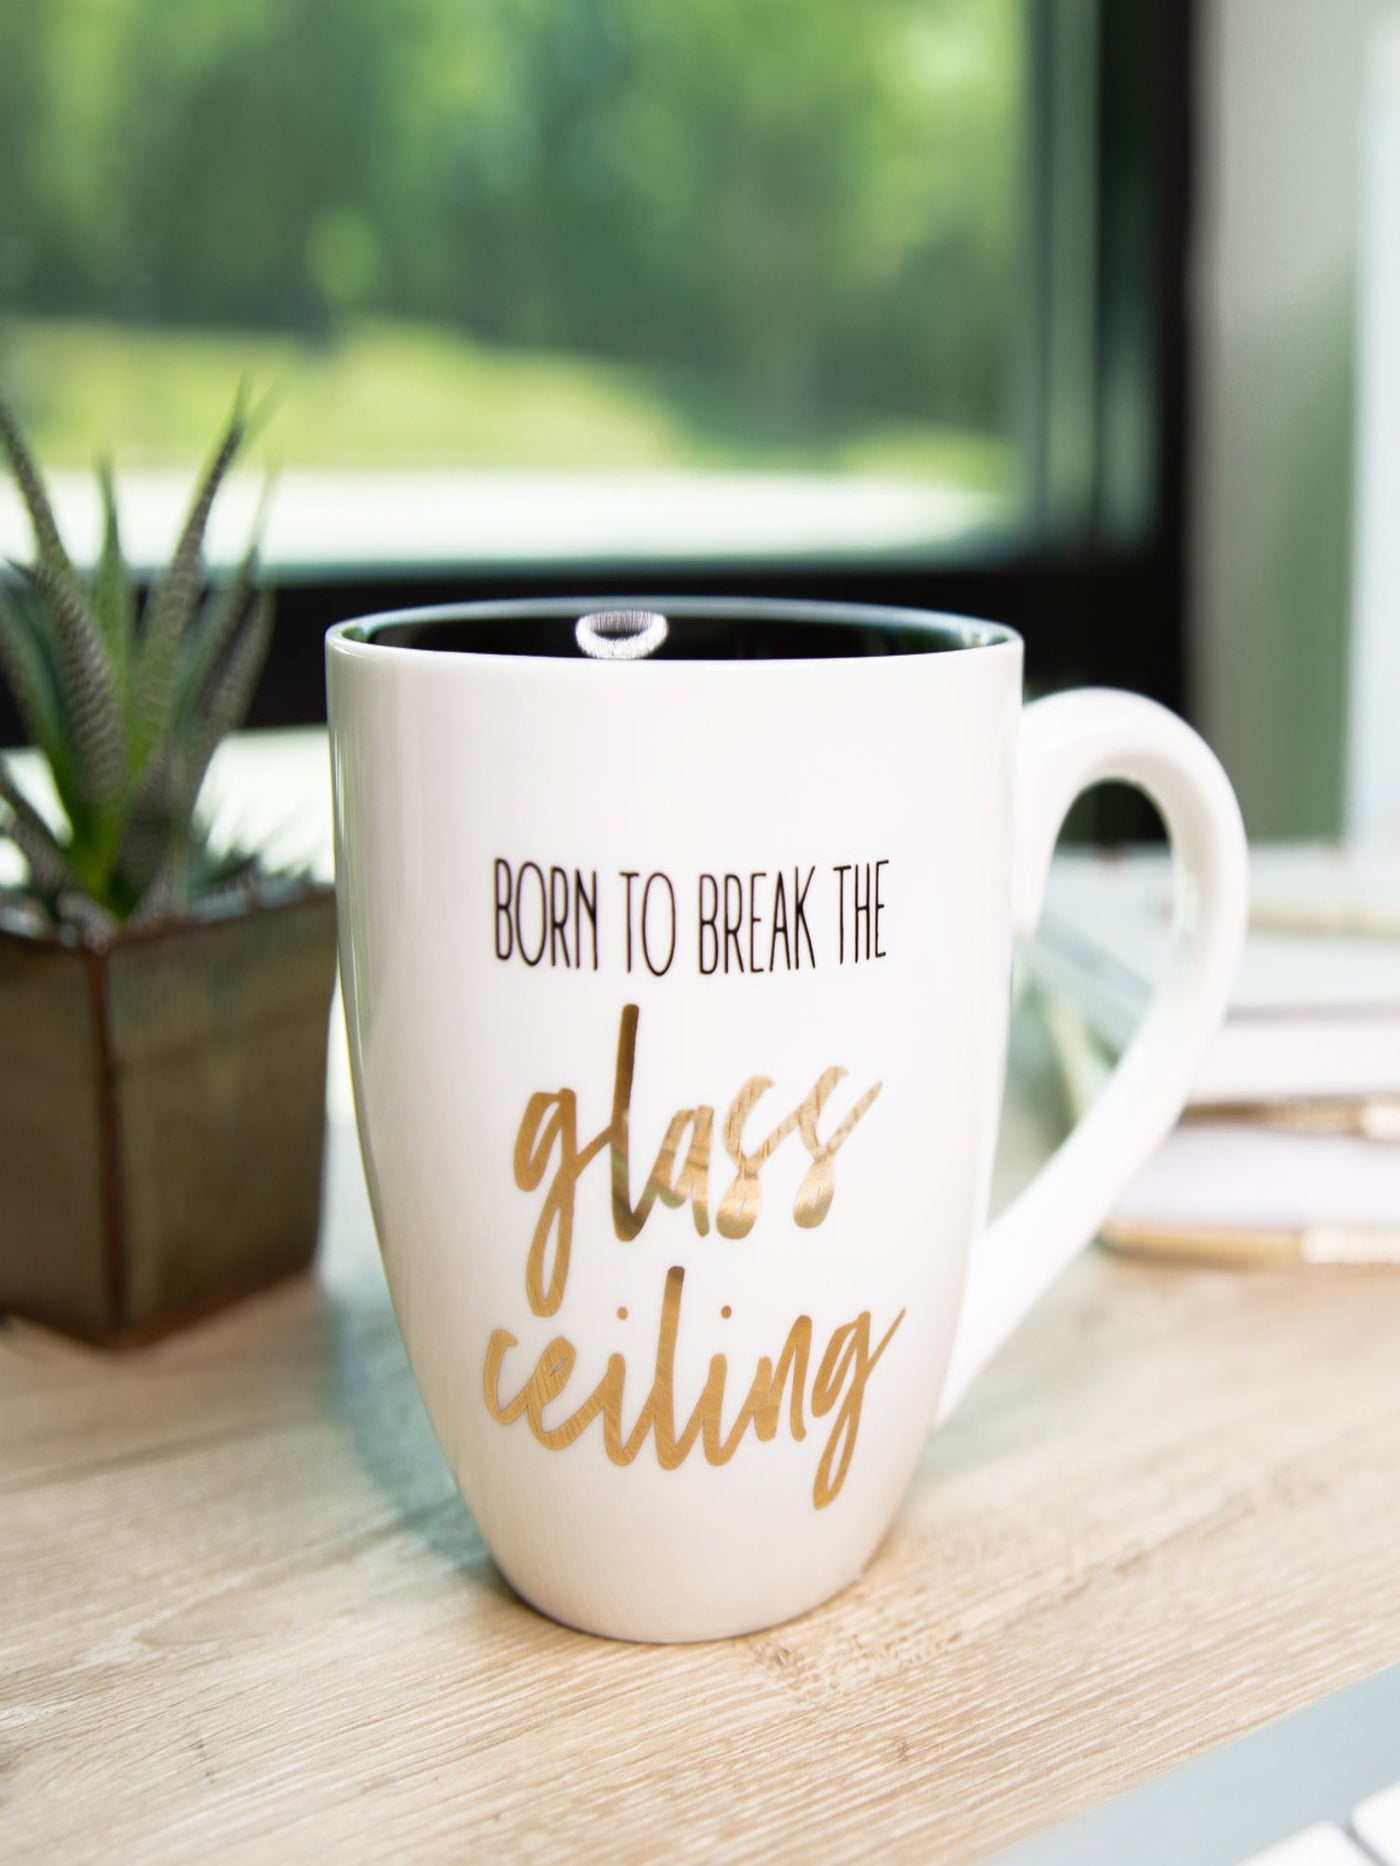 Born to Break the Glass Ceiling Coffee Mug